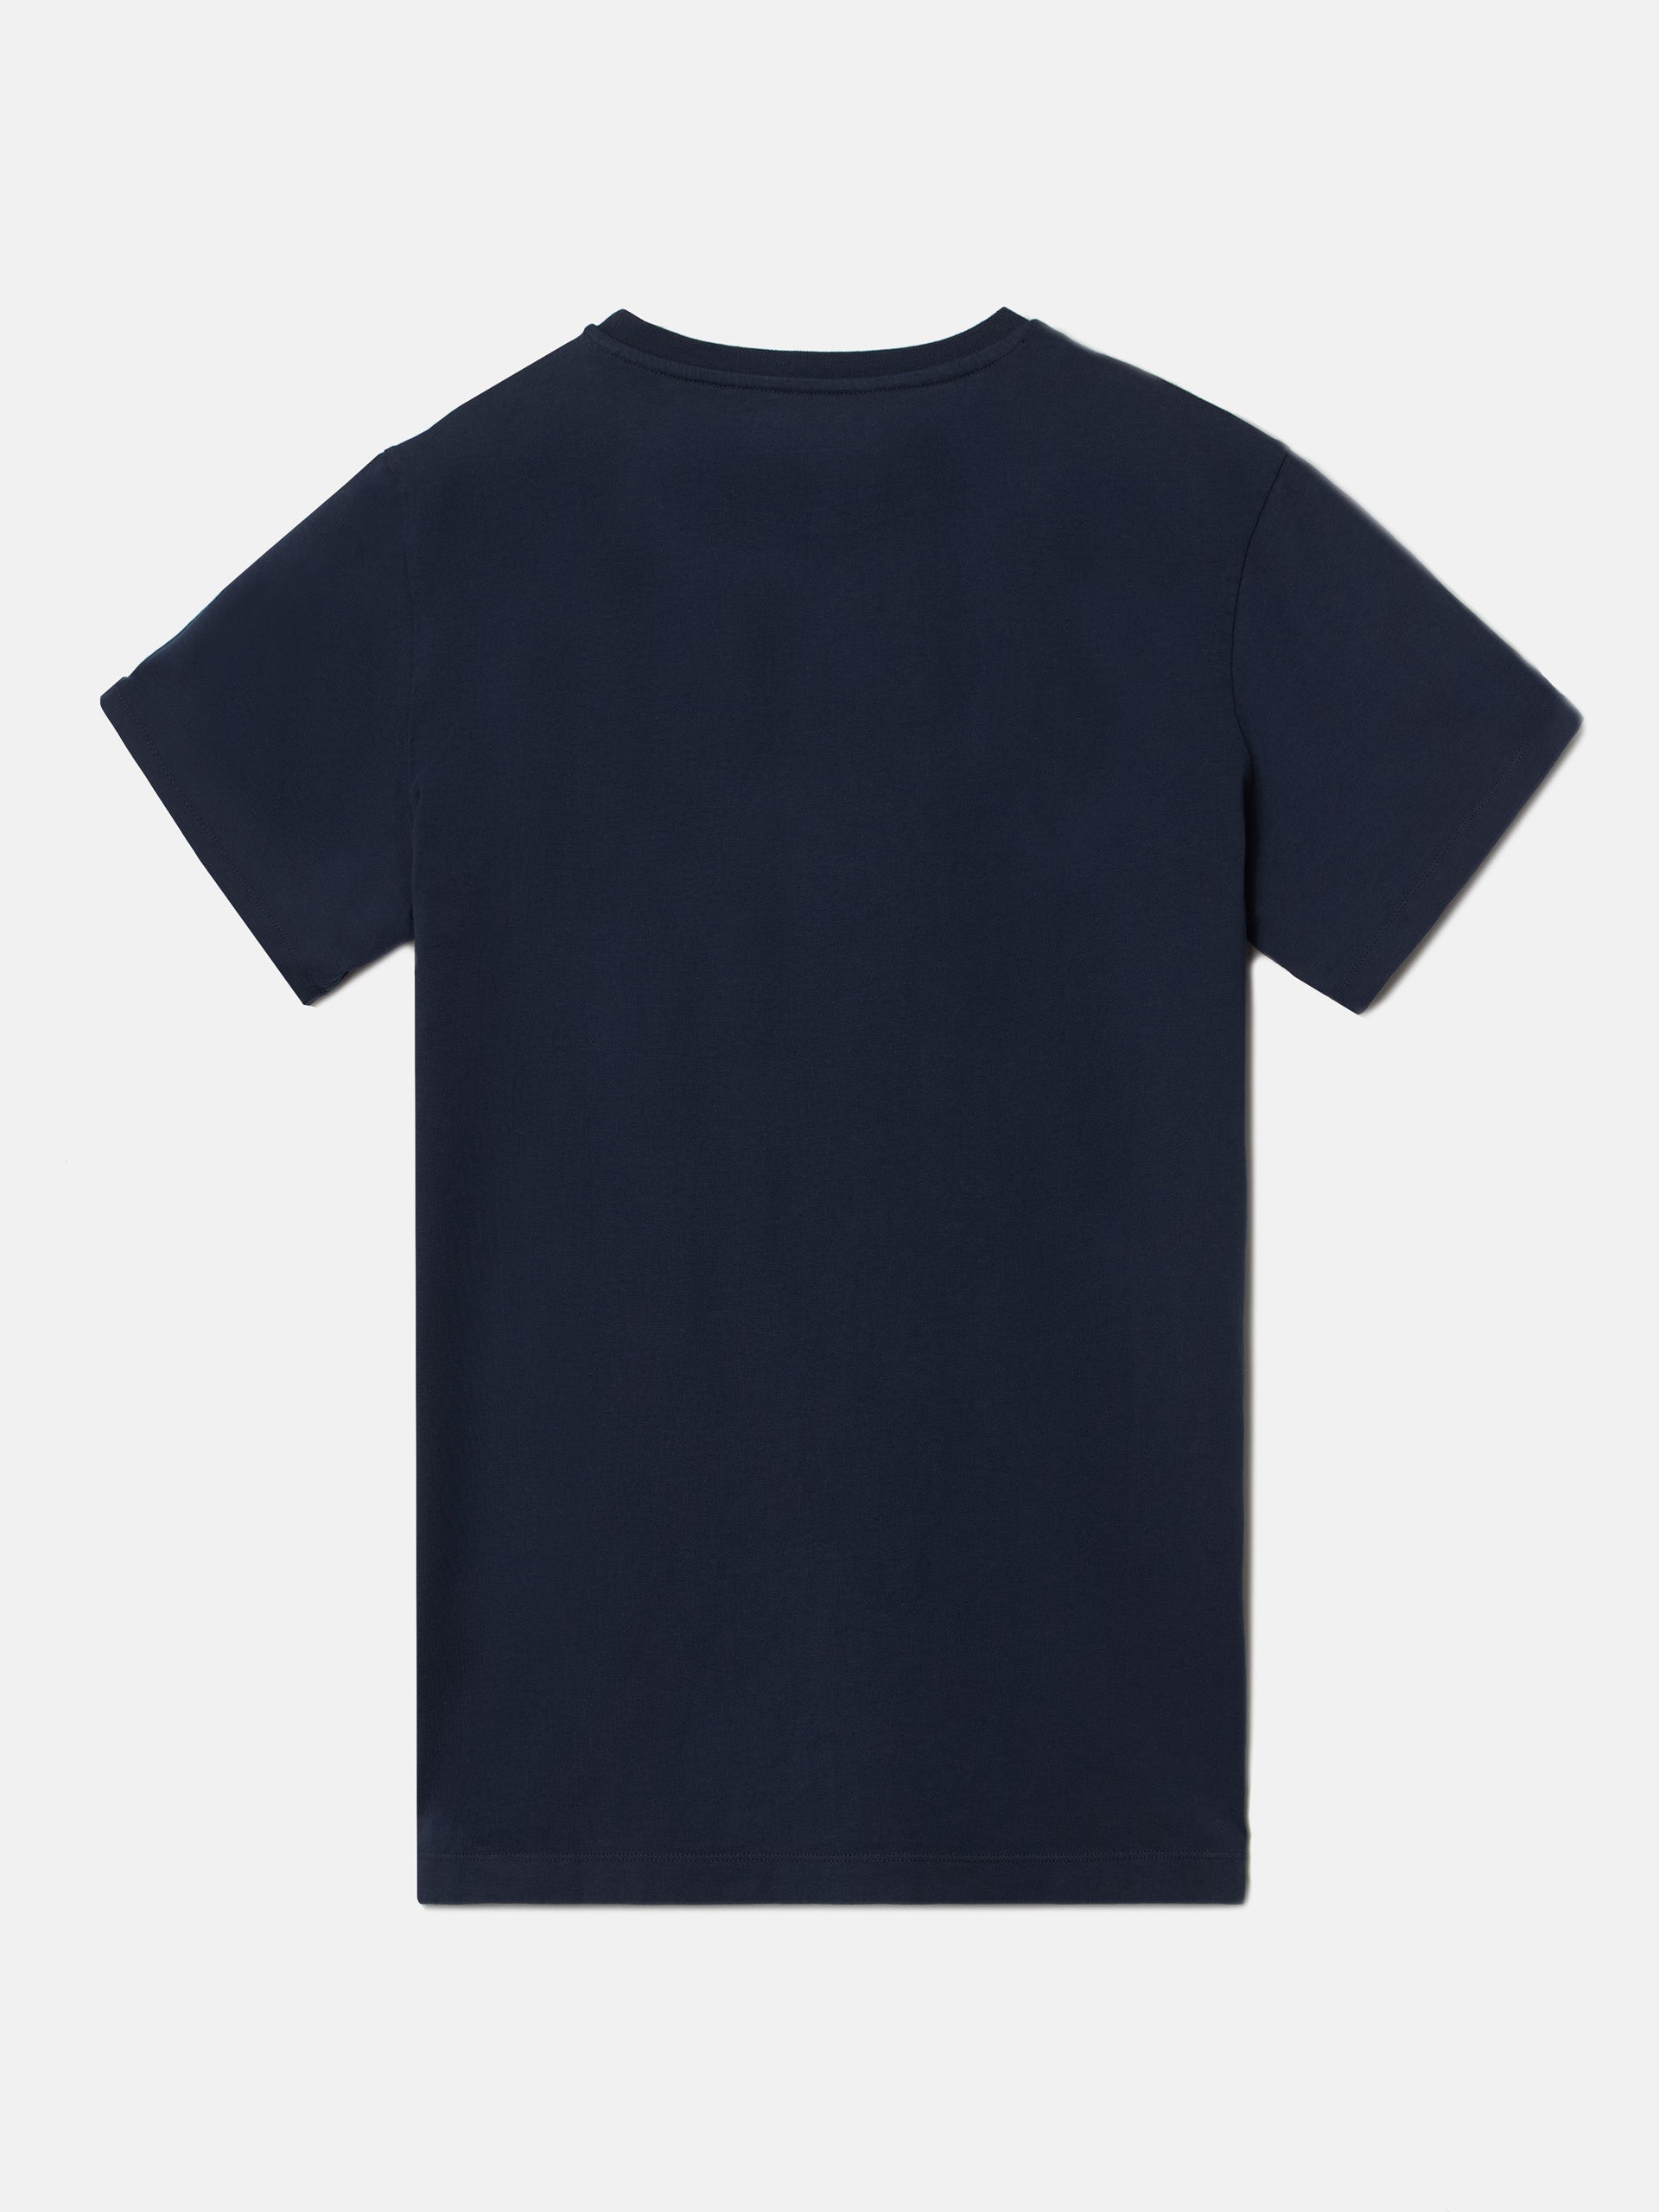 Camiseta SLBN azul marino